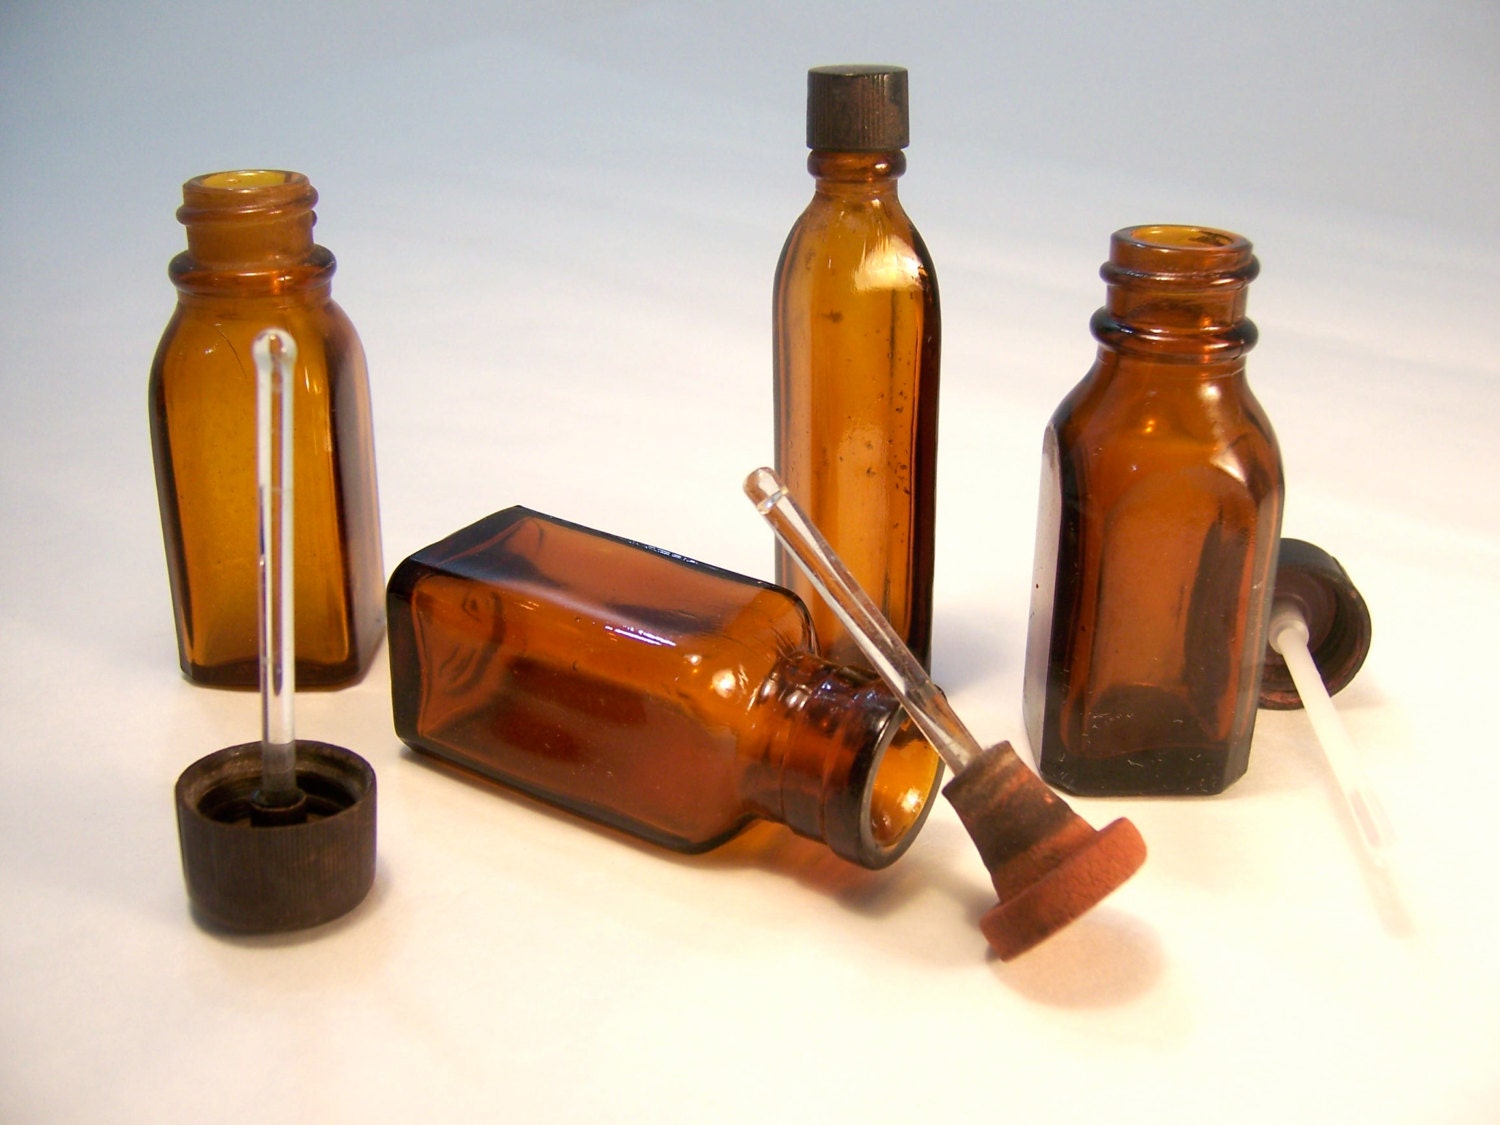 Download 4 Brown or amber glass vintage medicine bottles with droppers